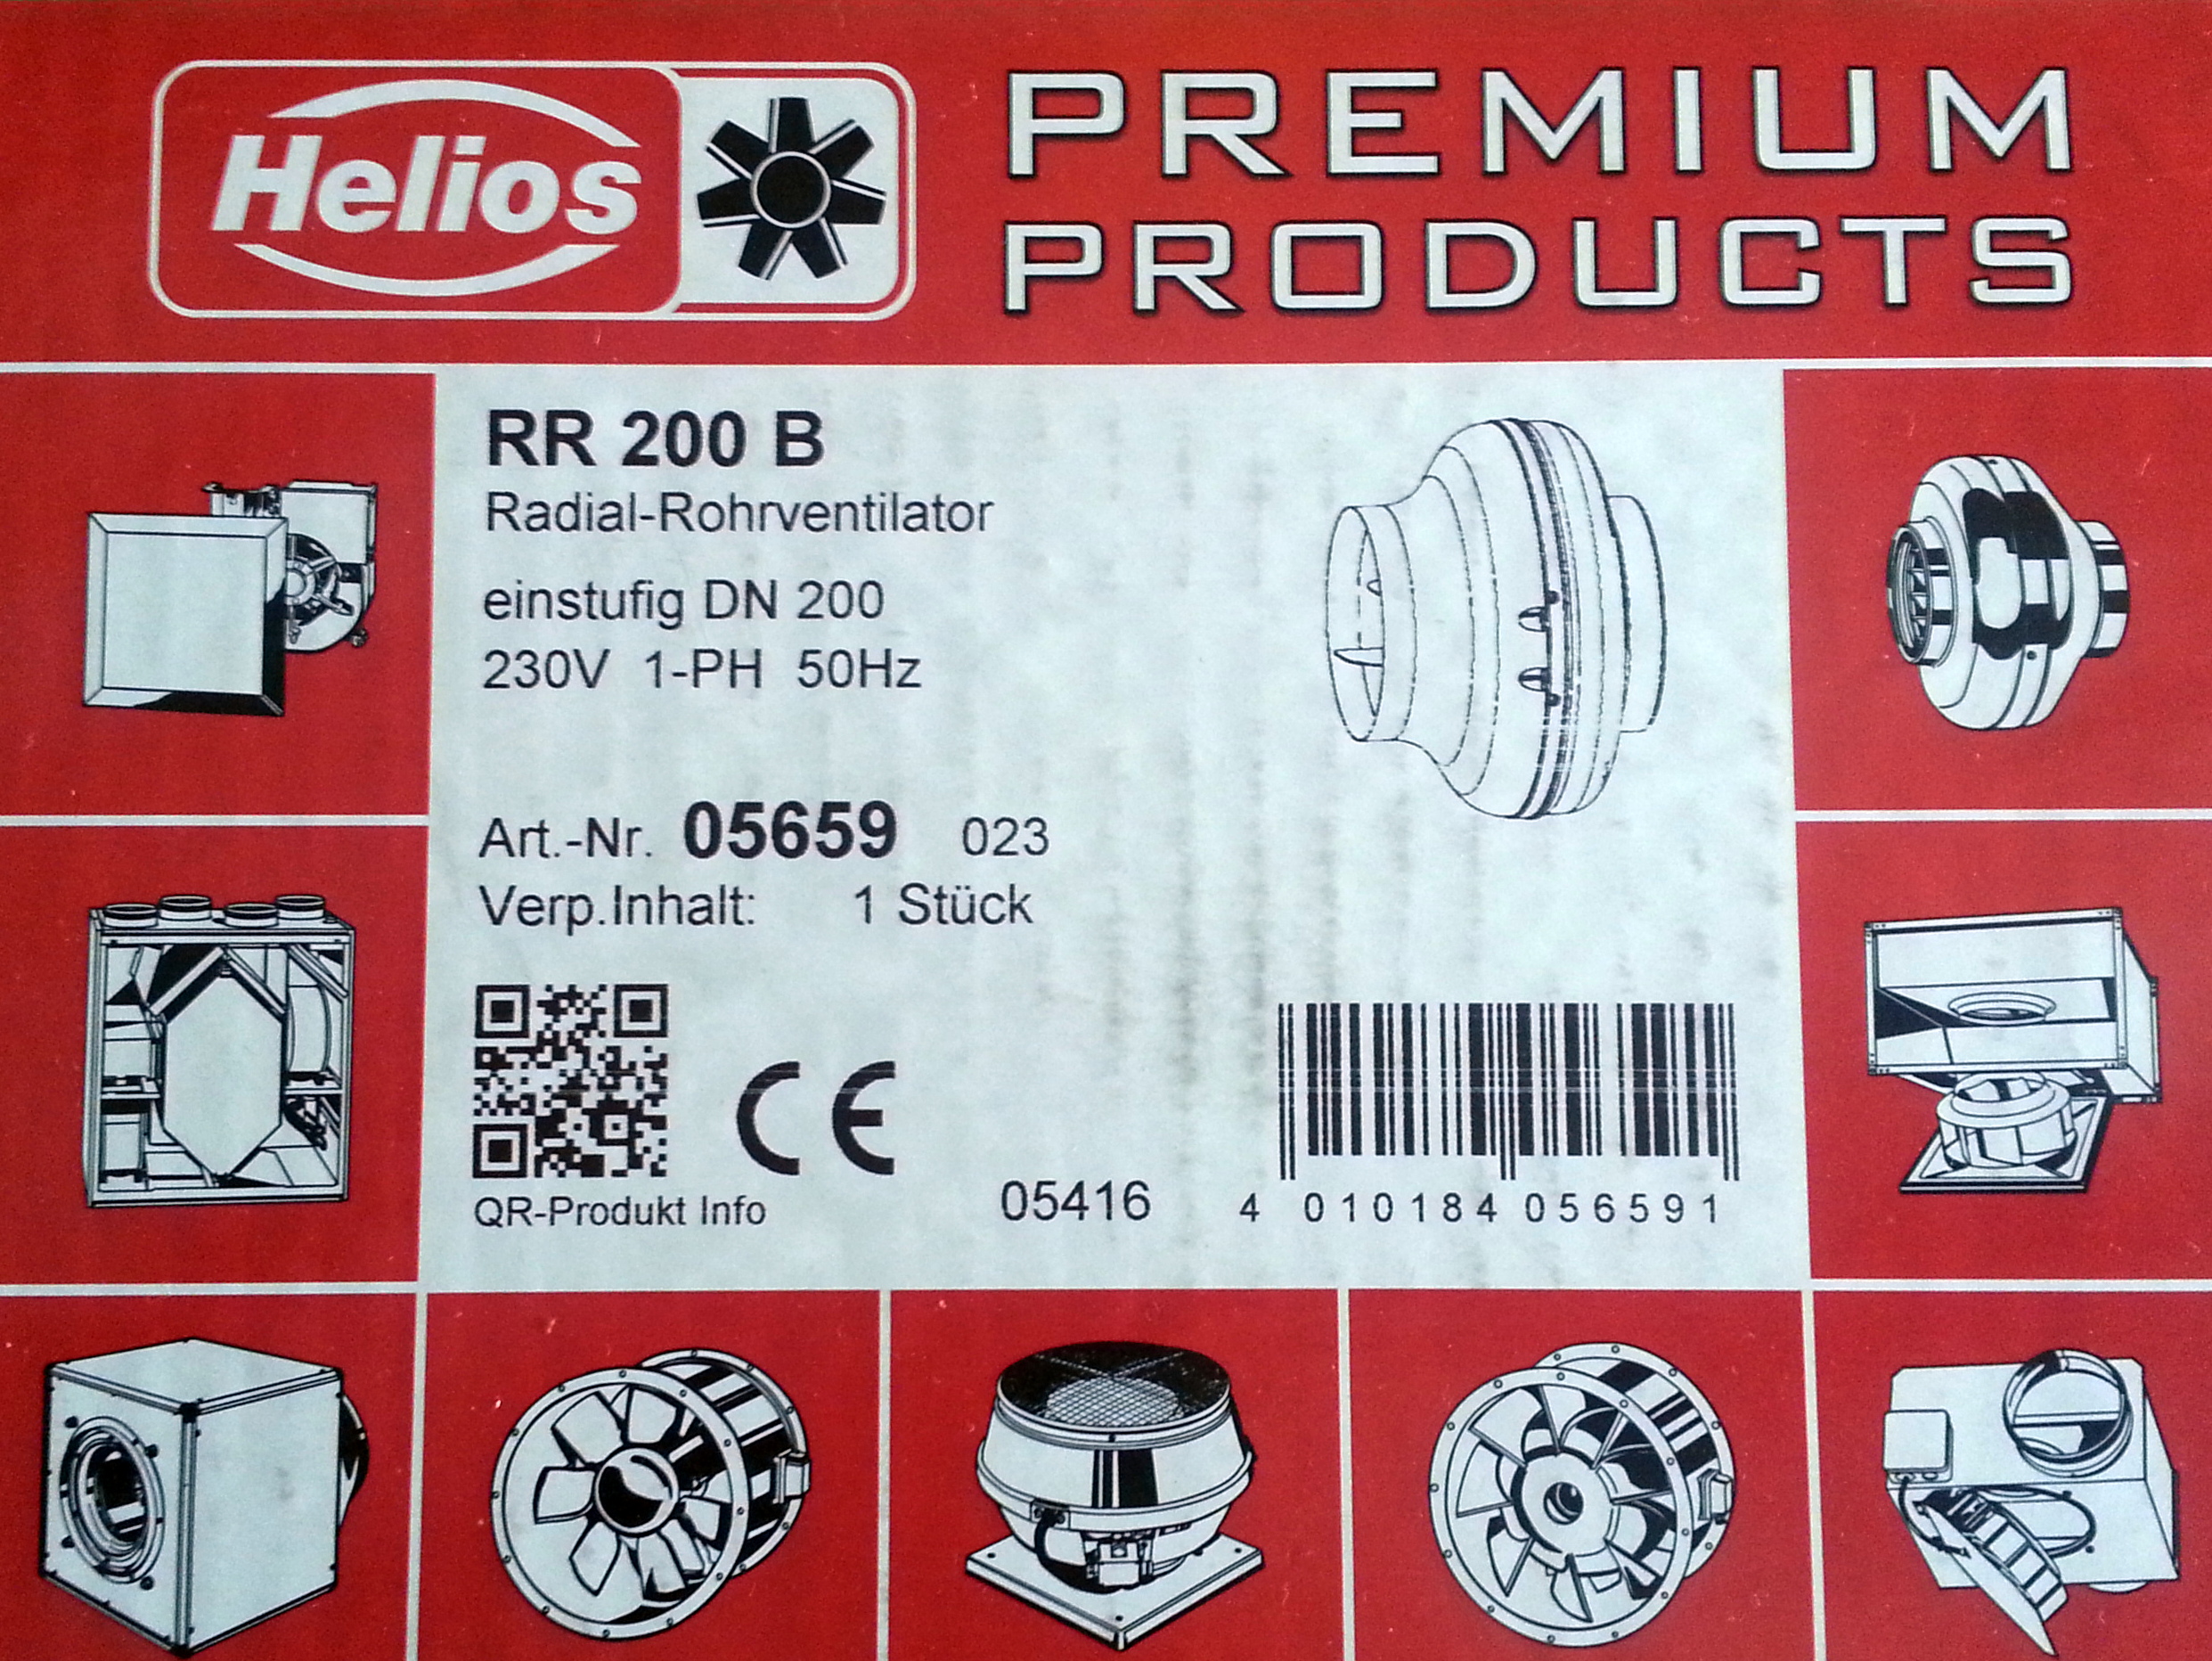 Helios RR 200 B Radial-Rohrventilator, 1-PH 5659